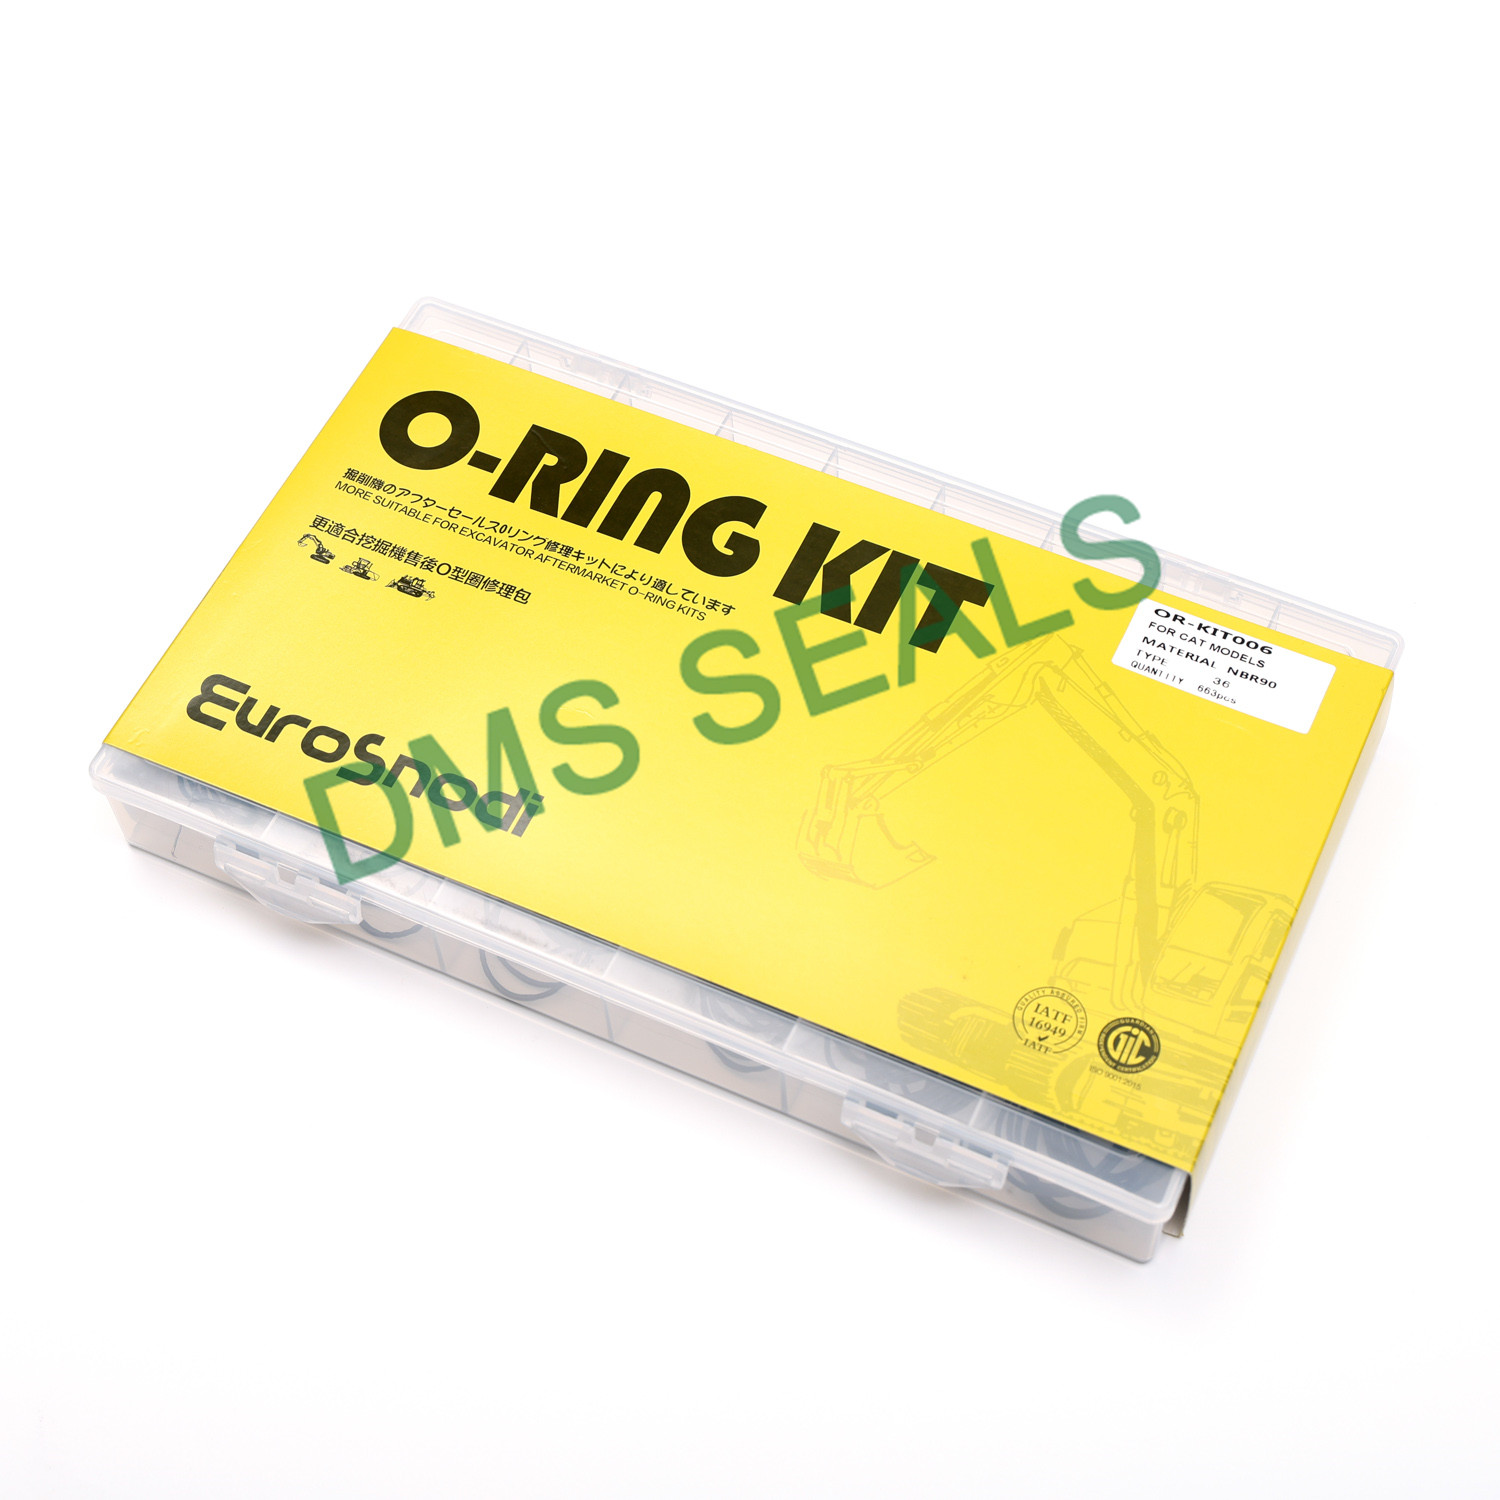 DMS Seals o ring seal kit vendor For seal-2